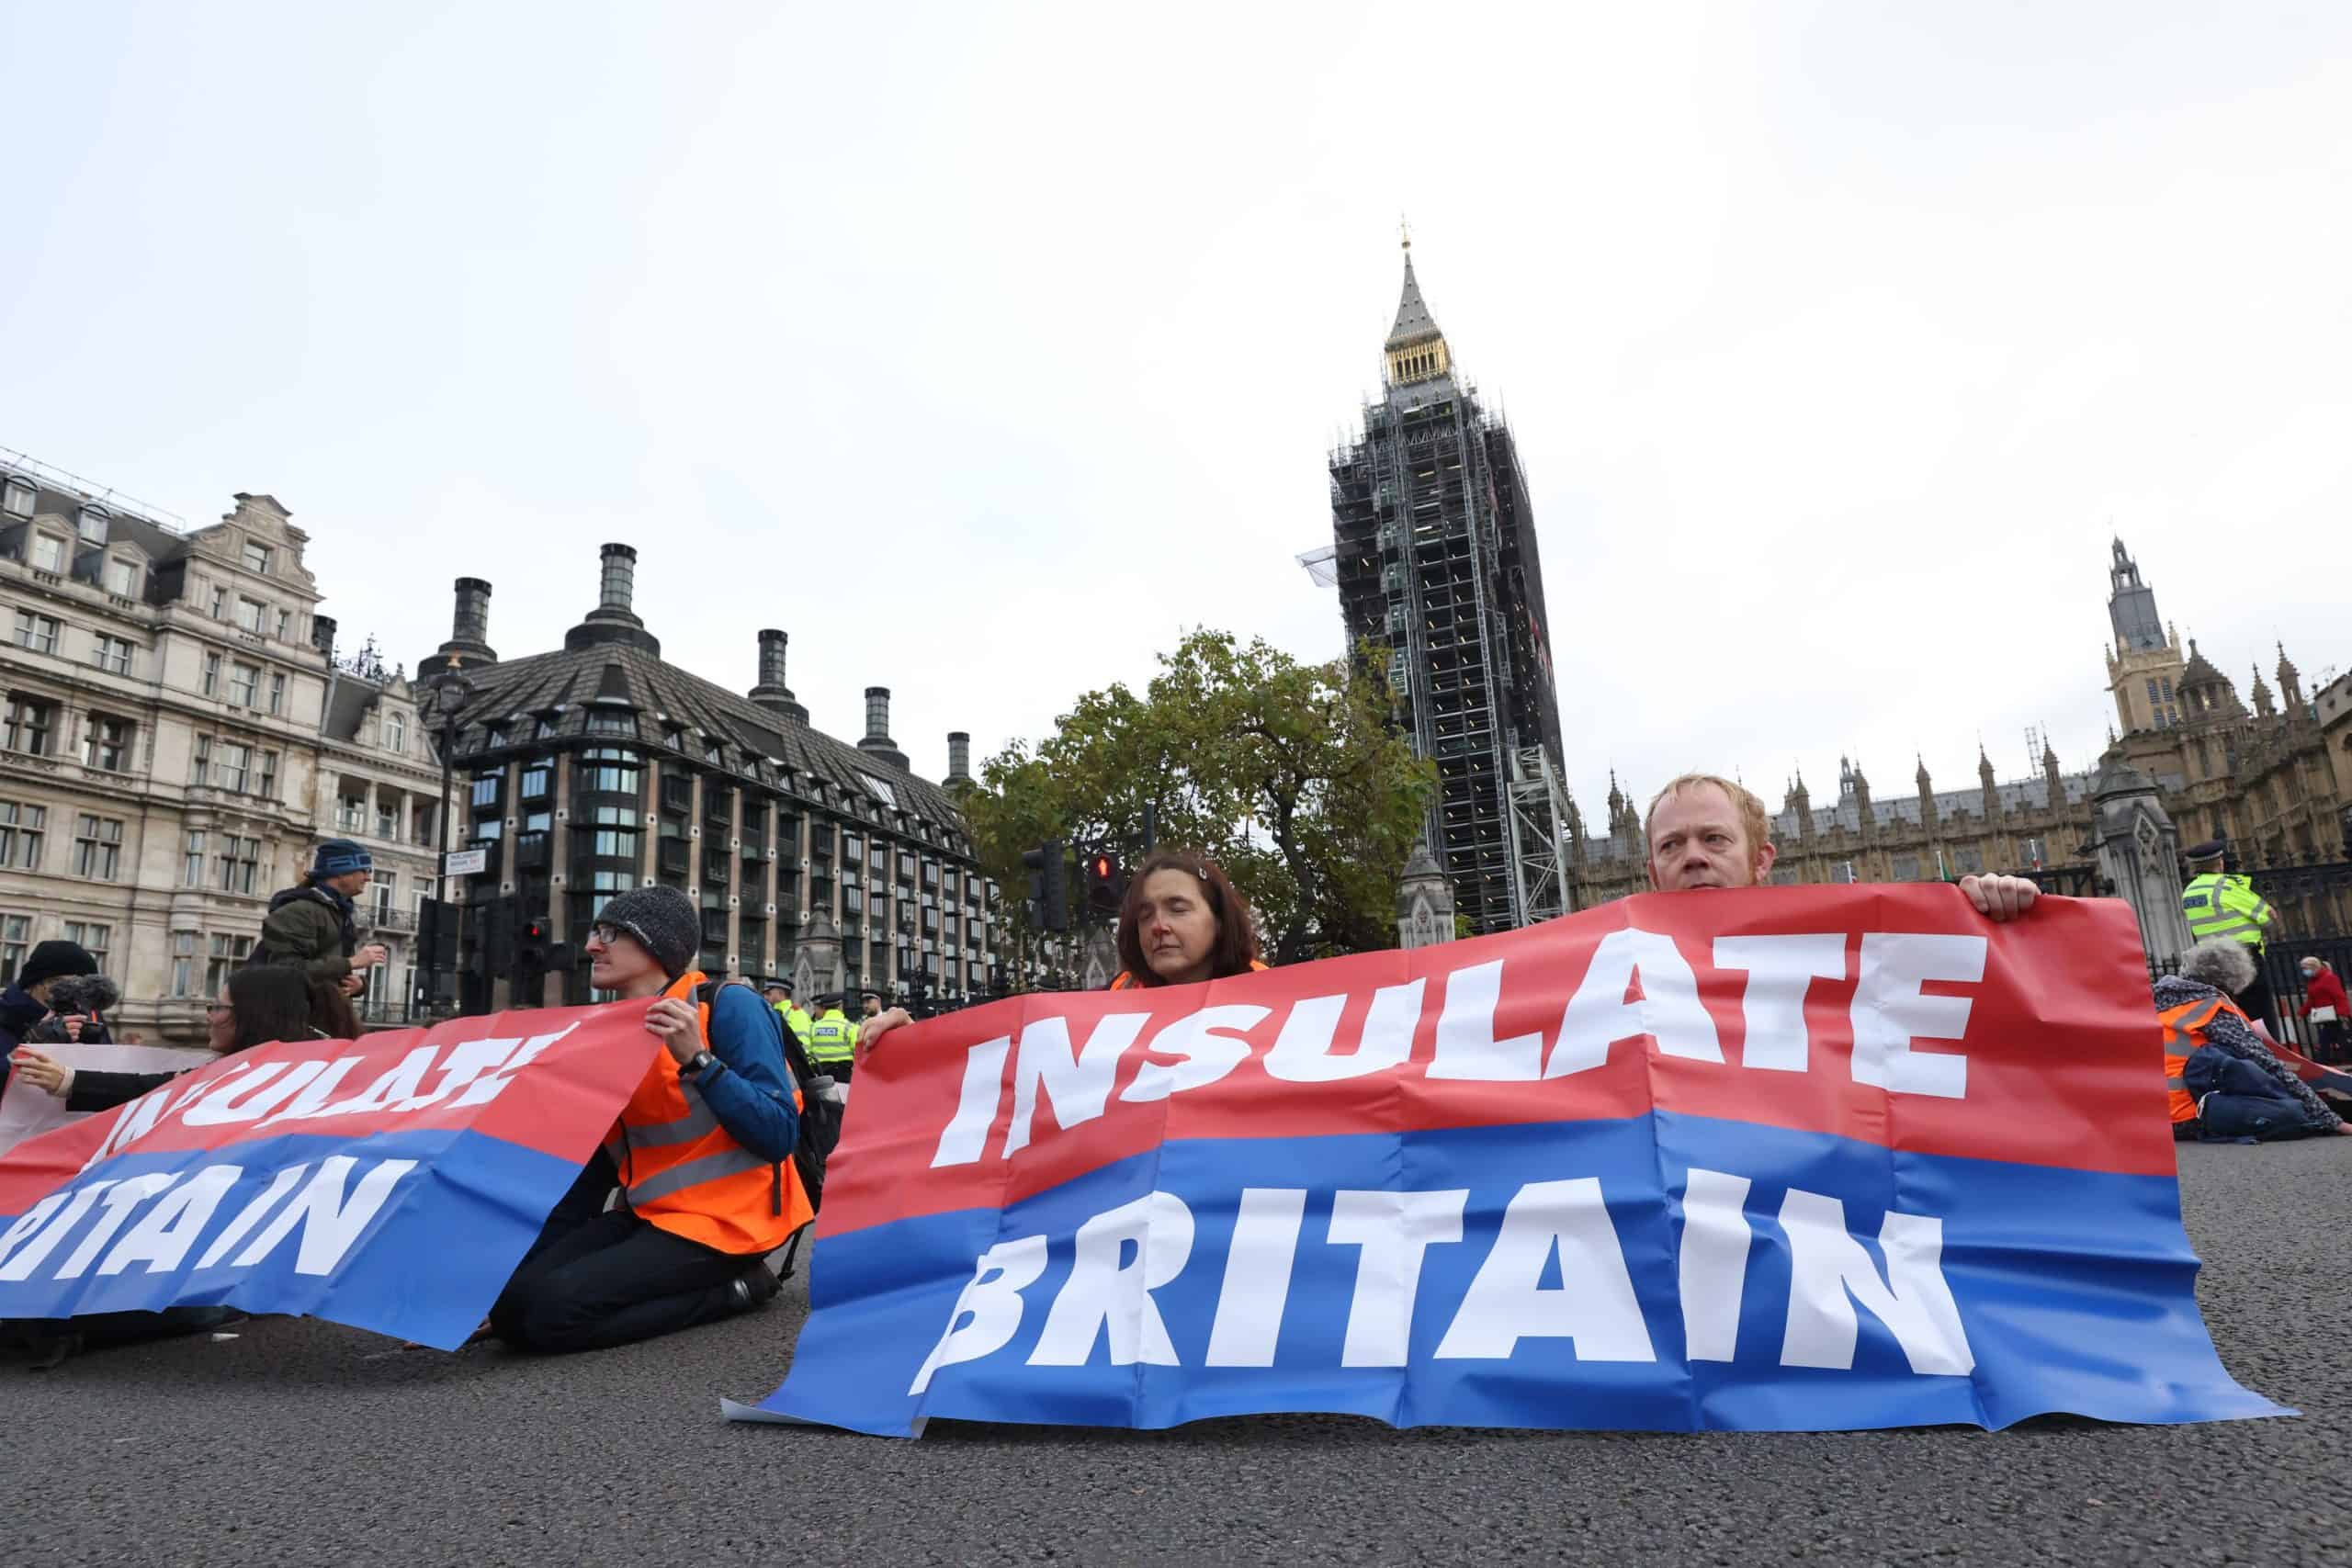 Insulate Britain blockades Parliament, enraging Tory MPs